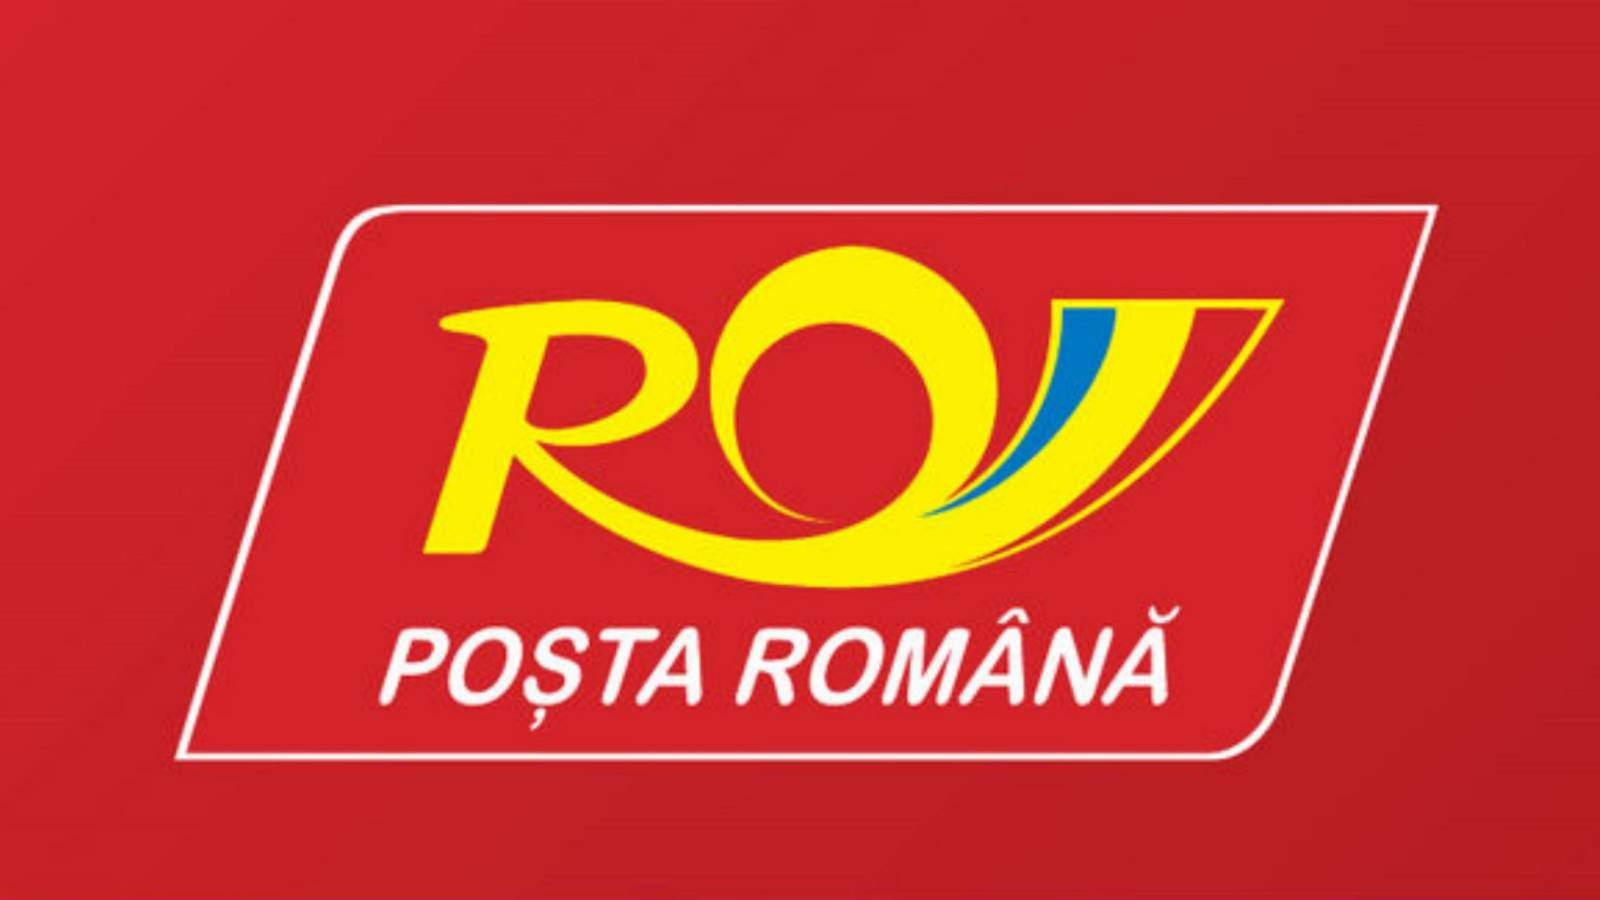 The Romanian Post prohibits shipments